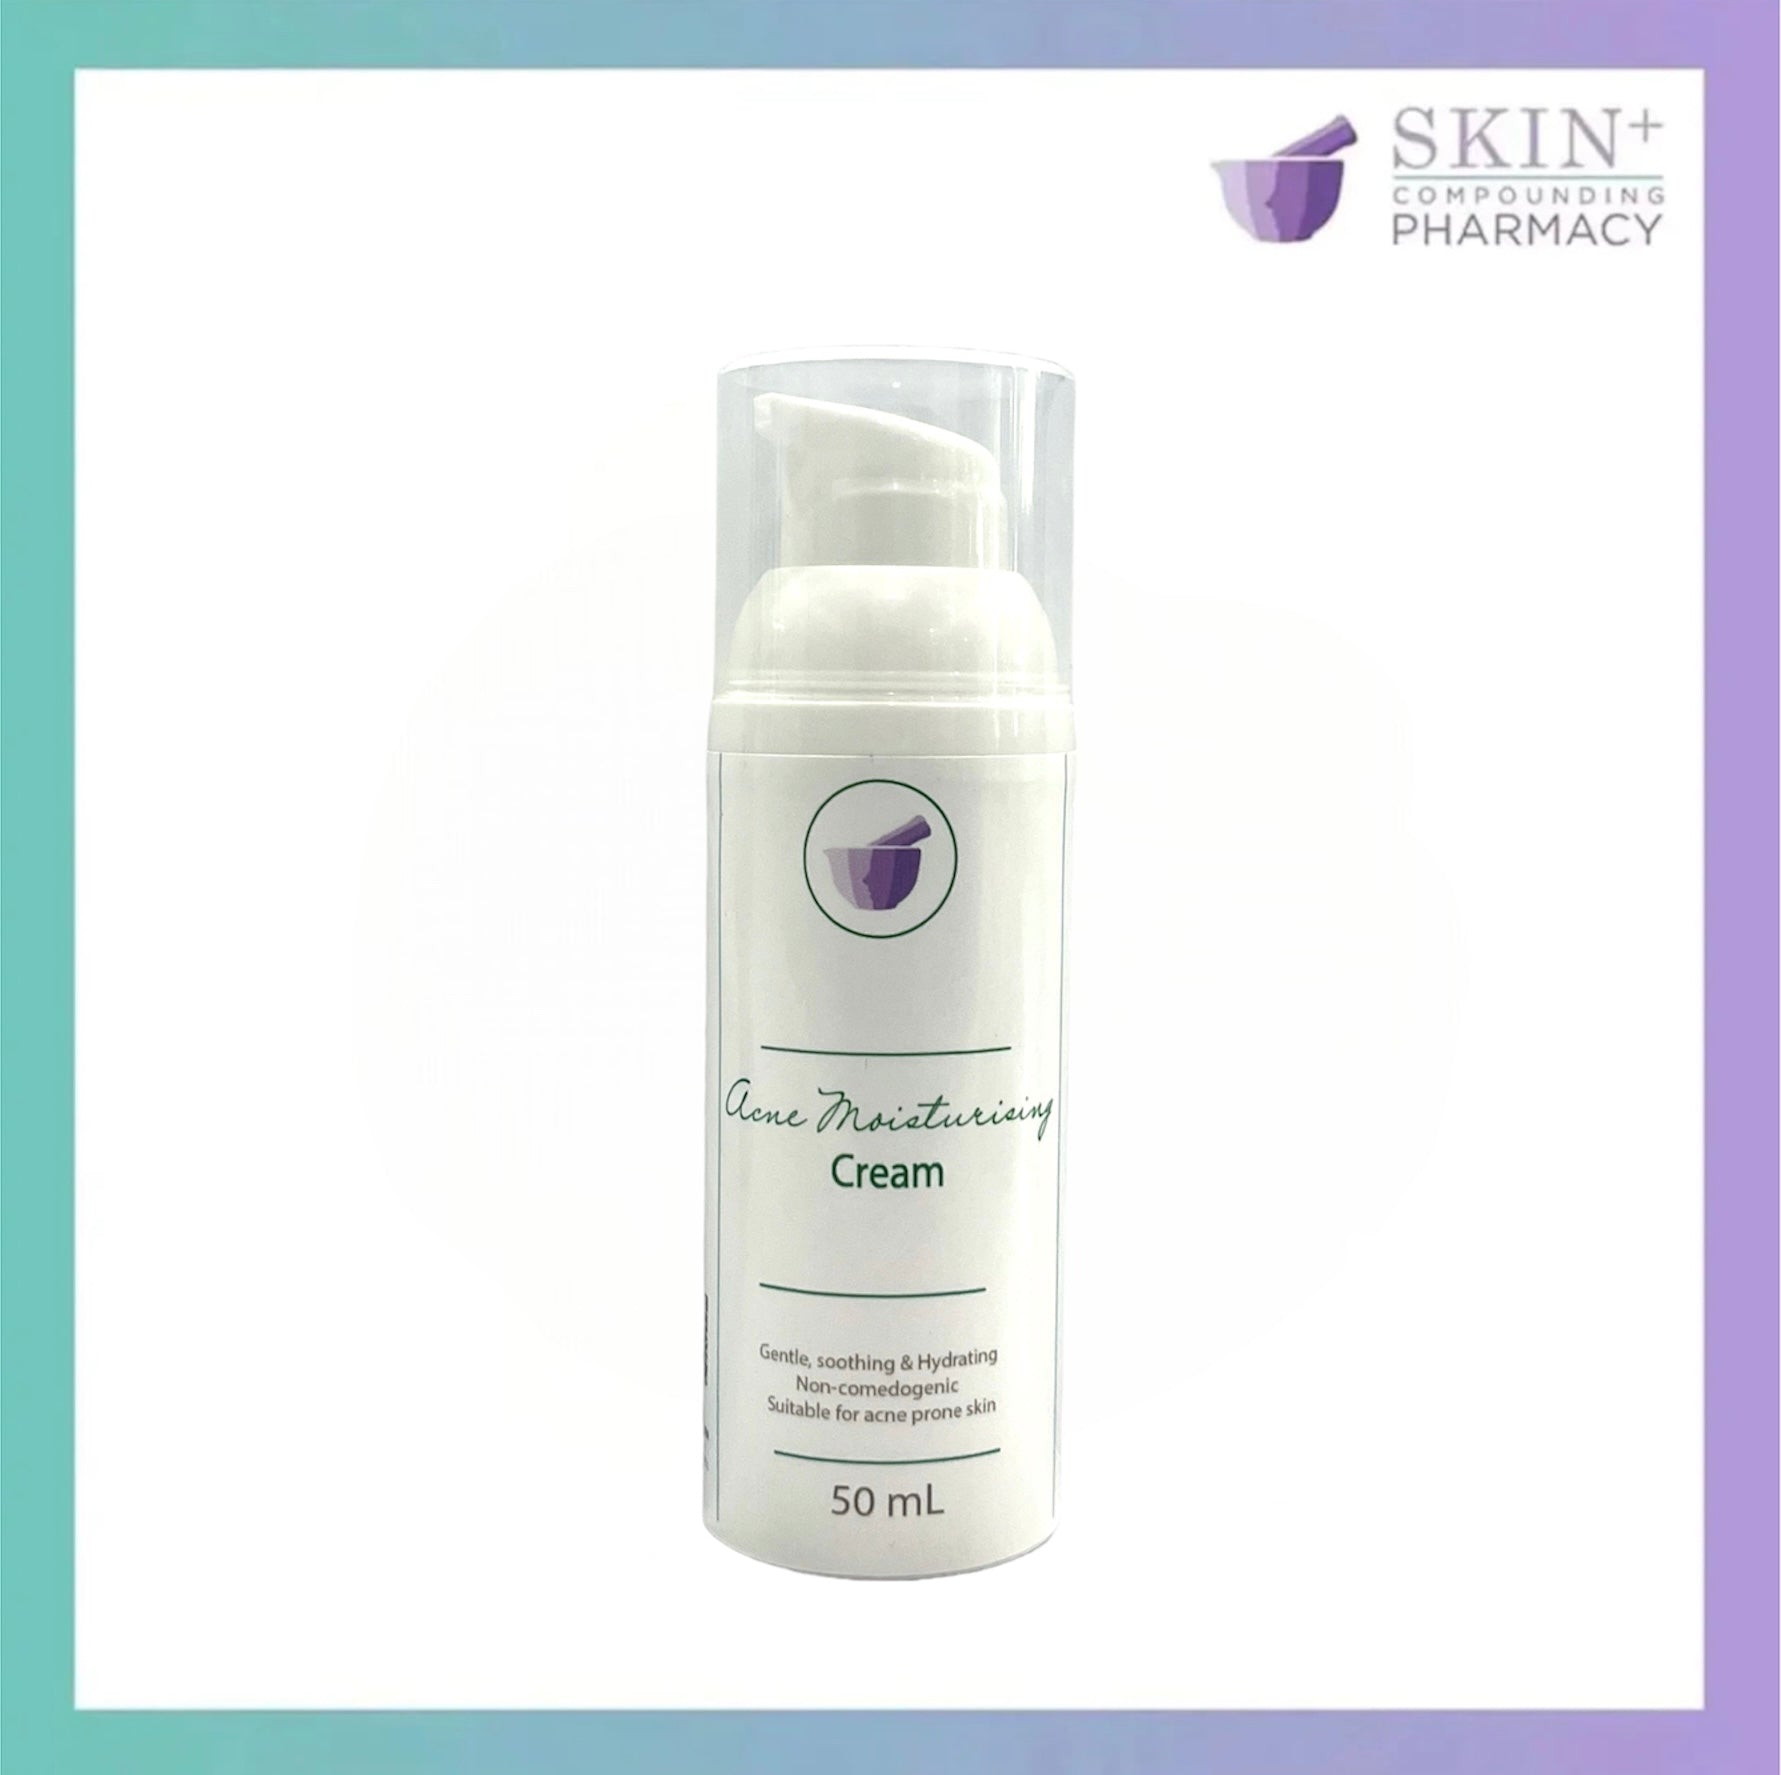 Skin Plus Pharnacy Acne Mositurising Cream 50mL | Skin Plus Compounding Pharmacy